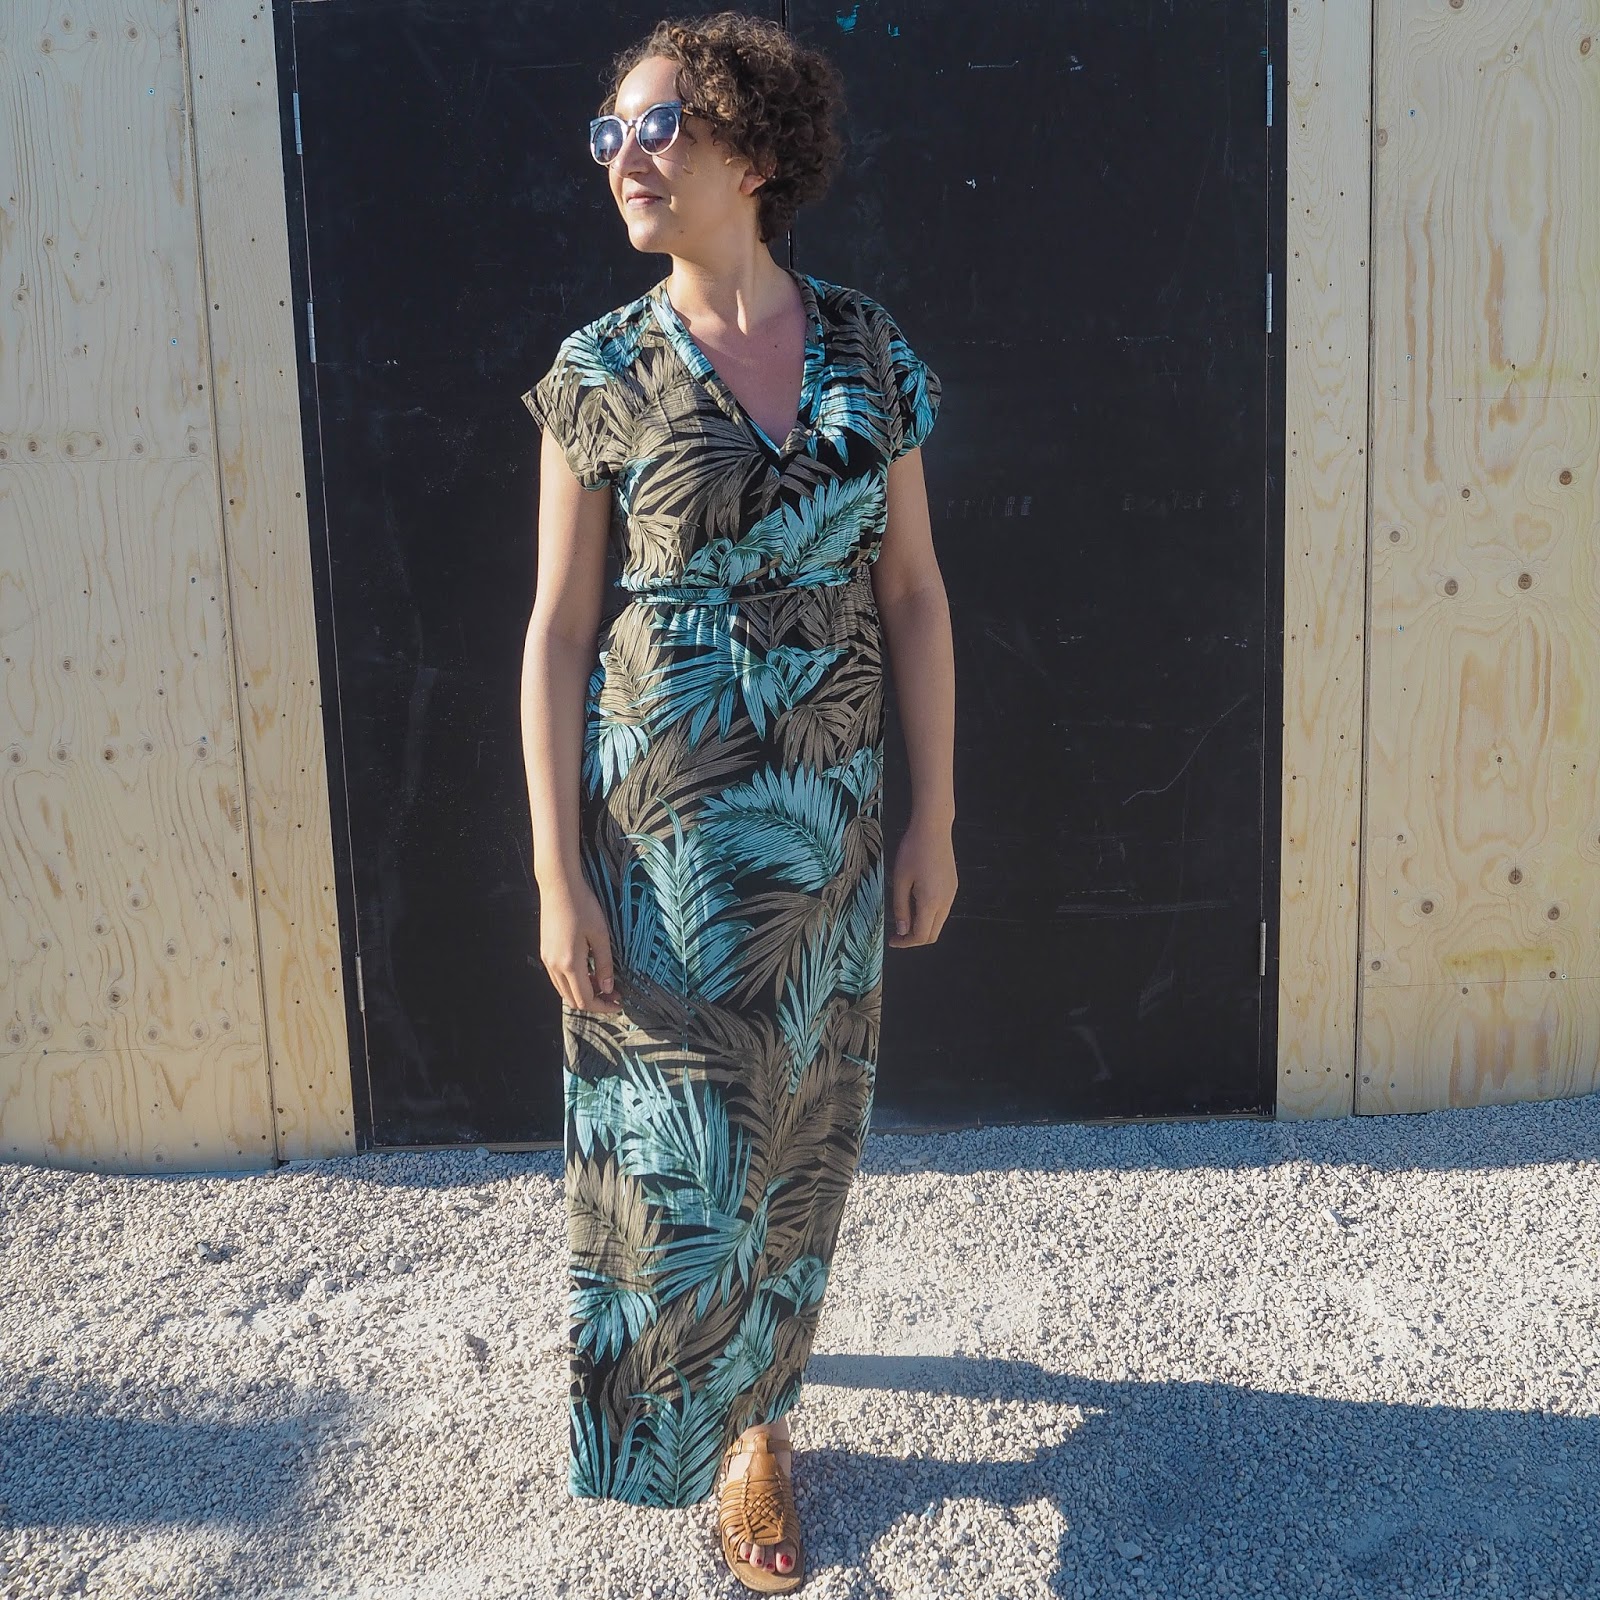 Fashion blogger wearing palm print maxi dress